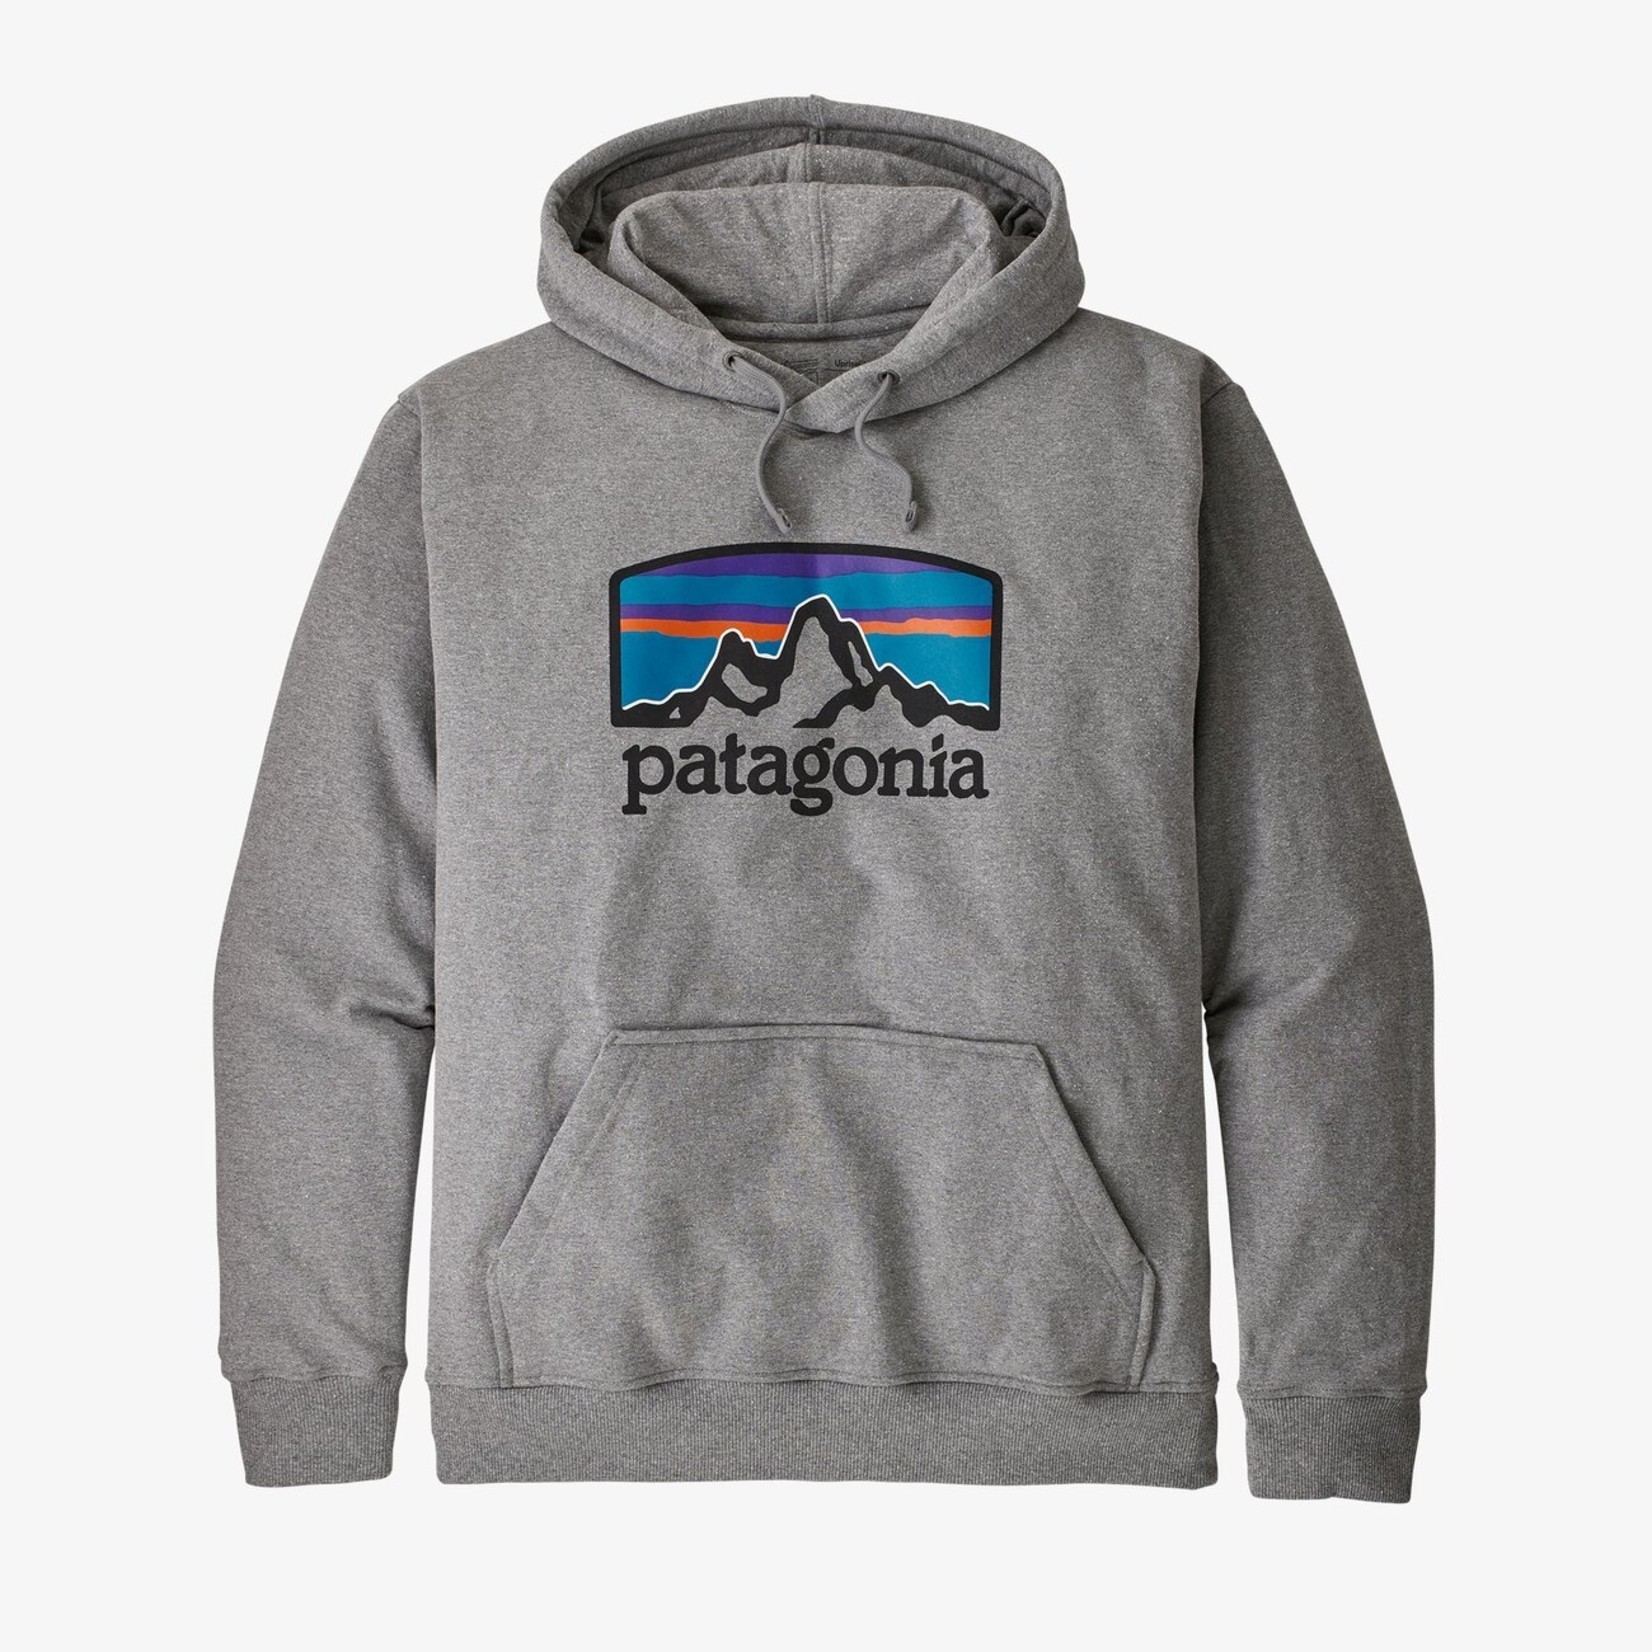 Patagonia Men’s fitz roy horizons uprisal hoody